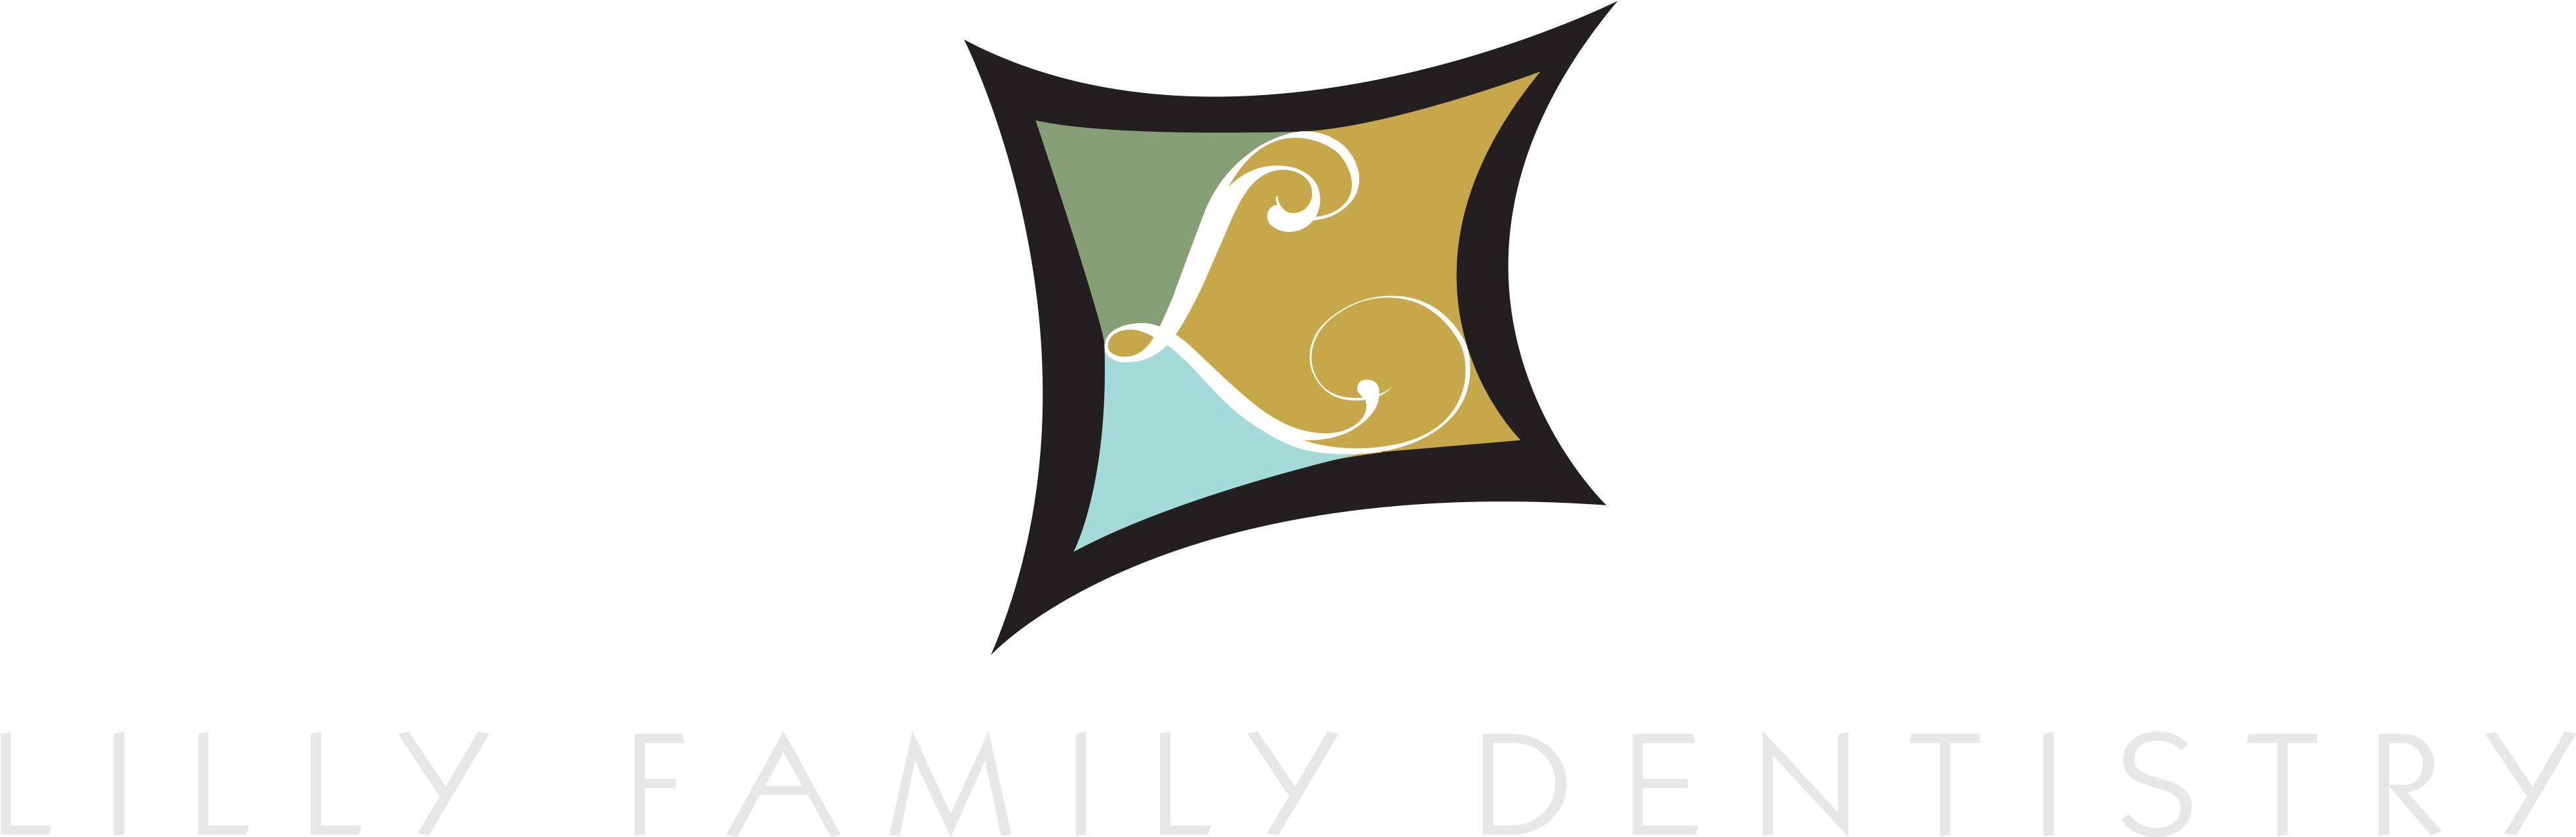 Family Dentistry - Lilly Family Dentistry (3944x1374)